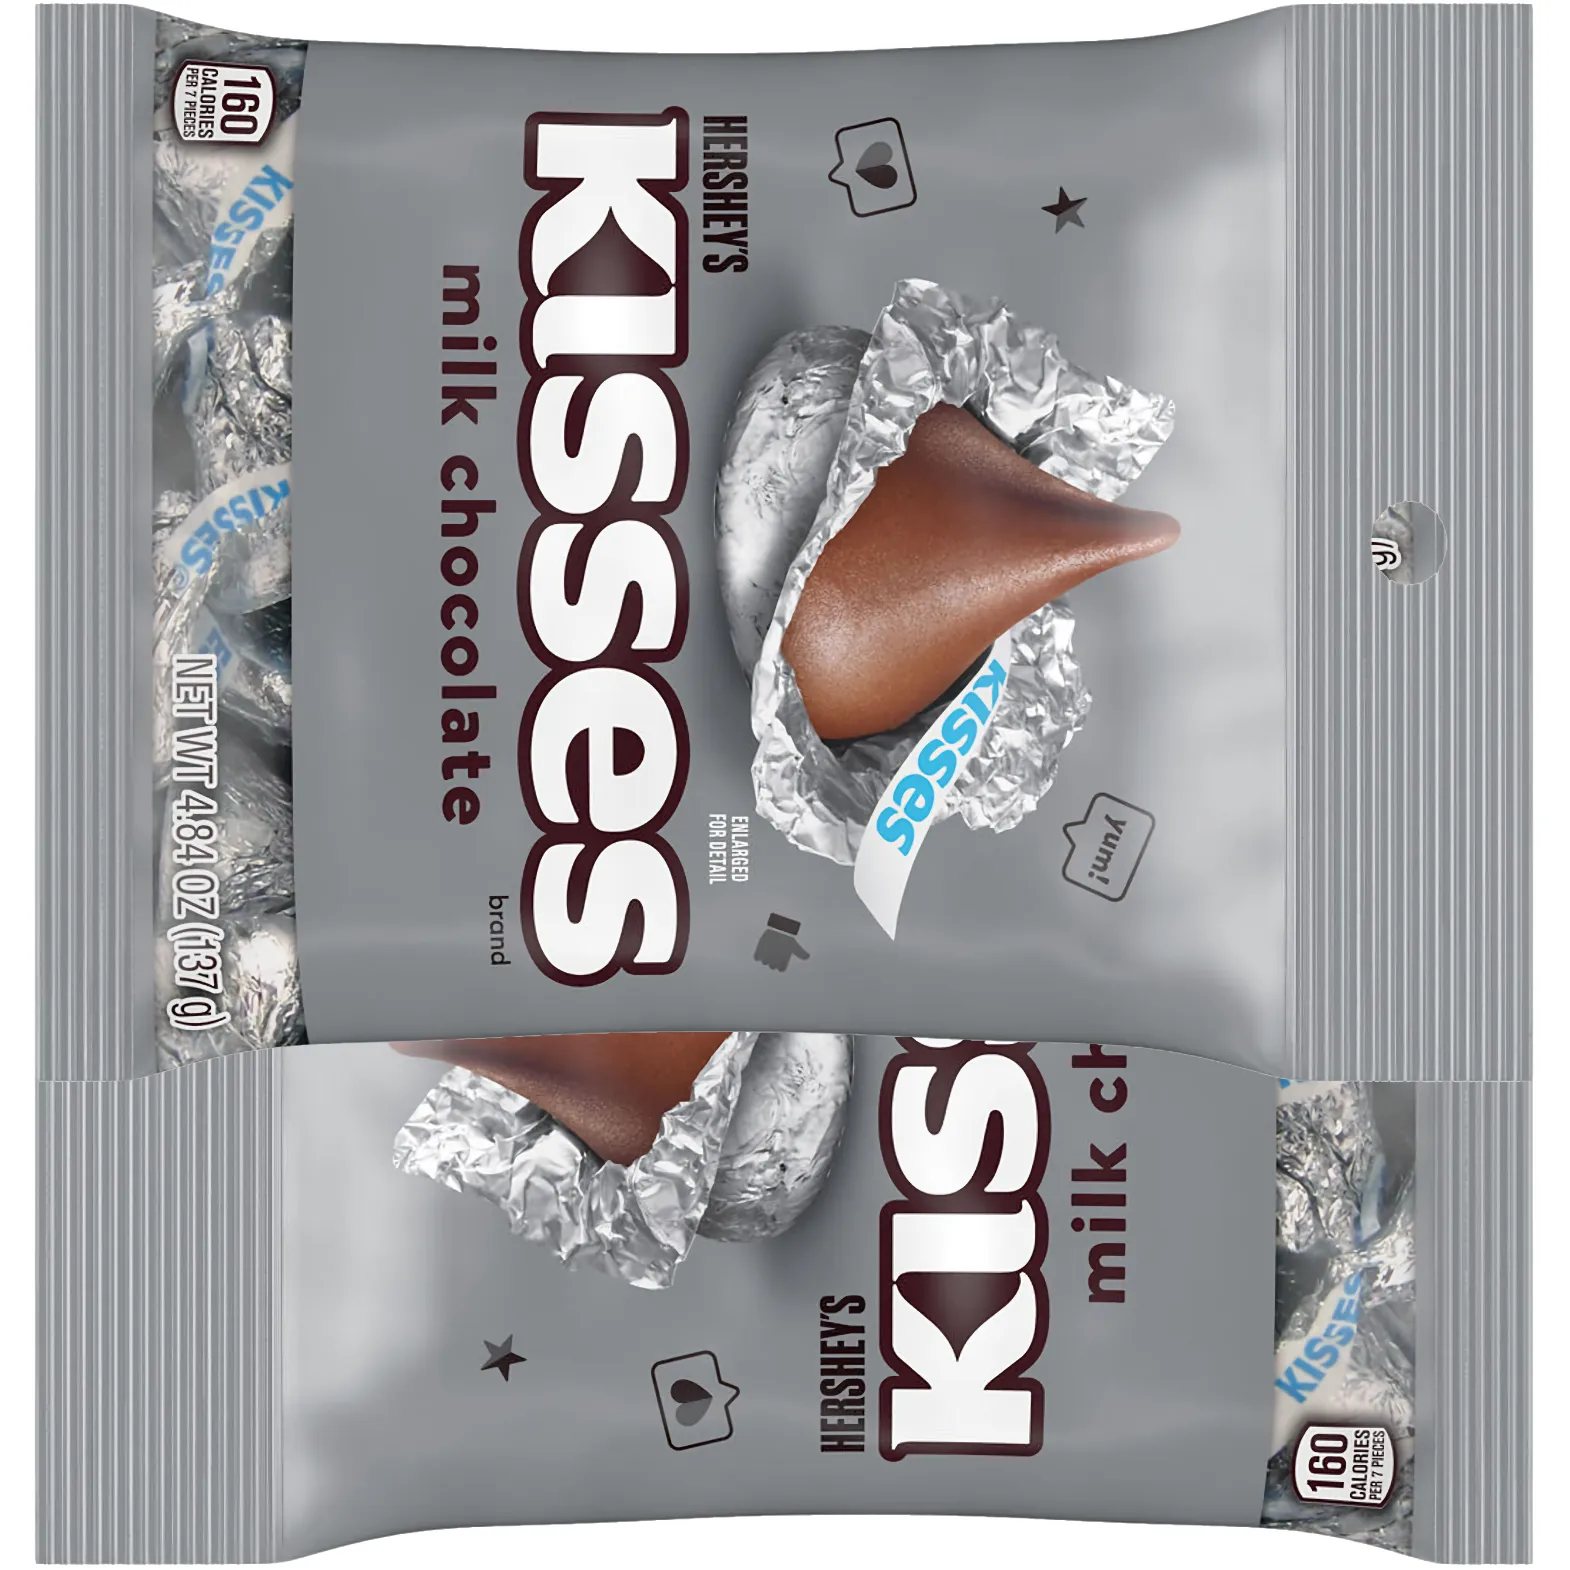 Free Hershey's Kisses At FreeOsk